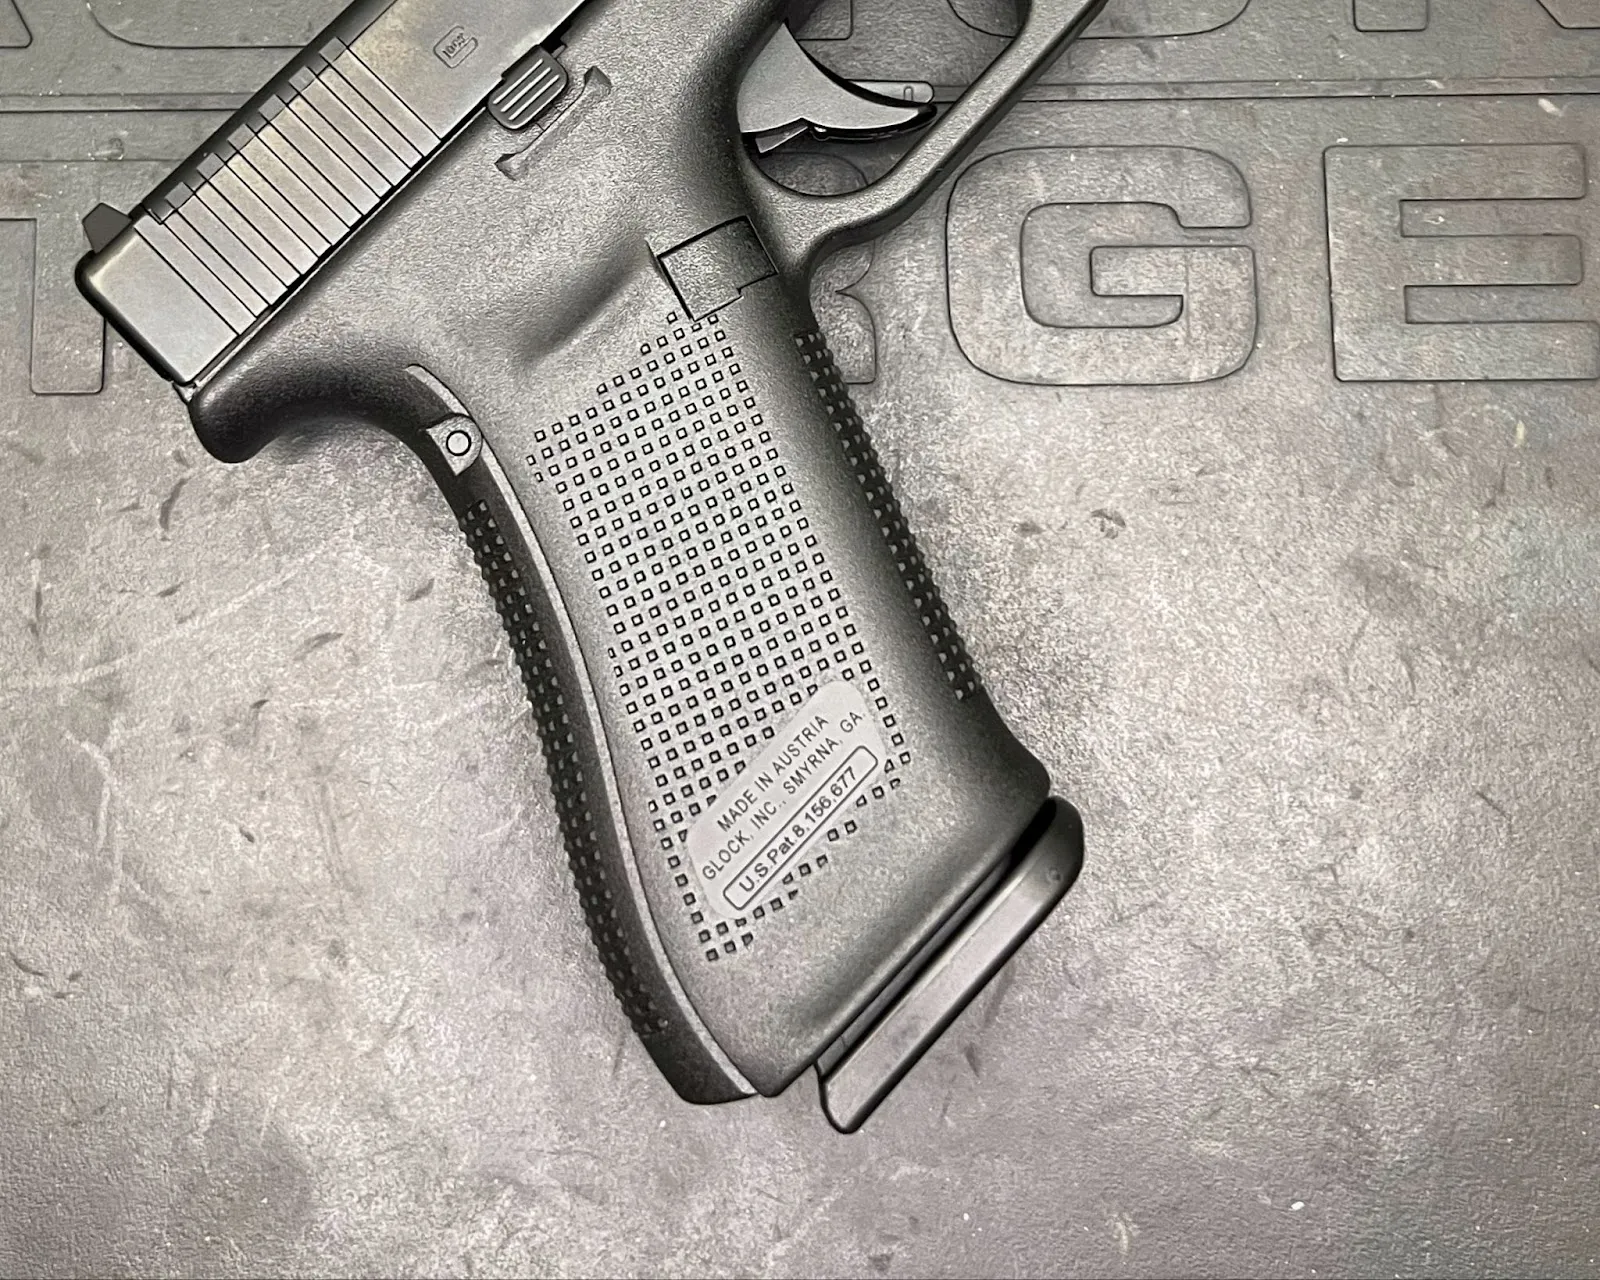 glock 47 gen 5 grip and trigger